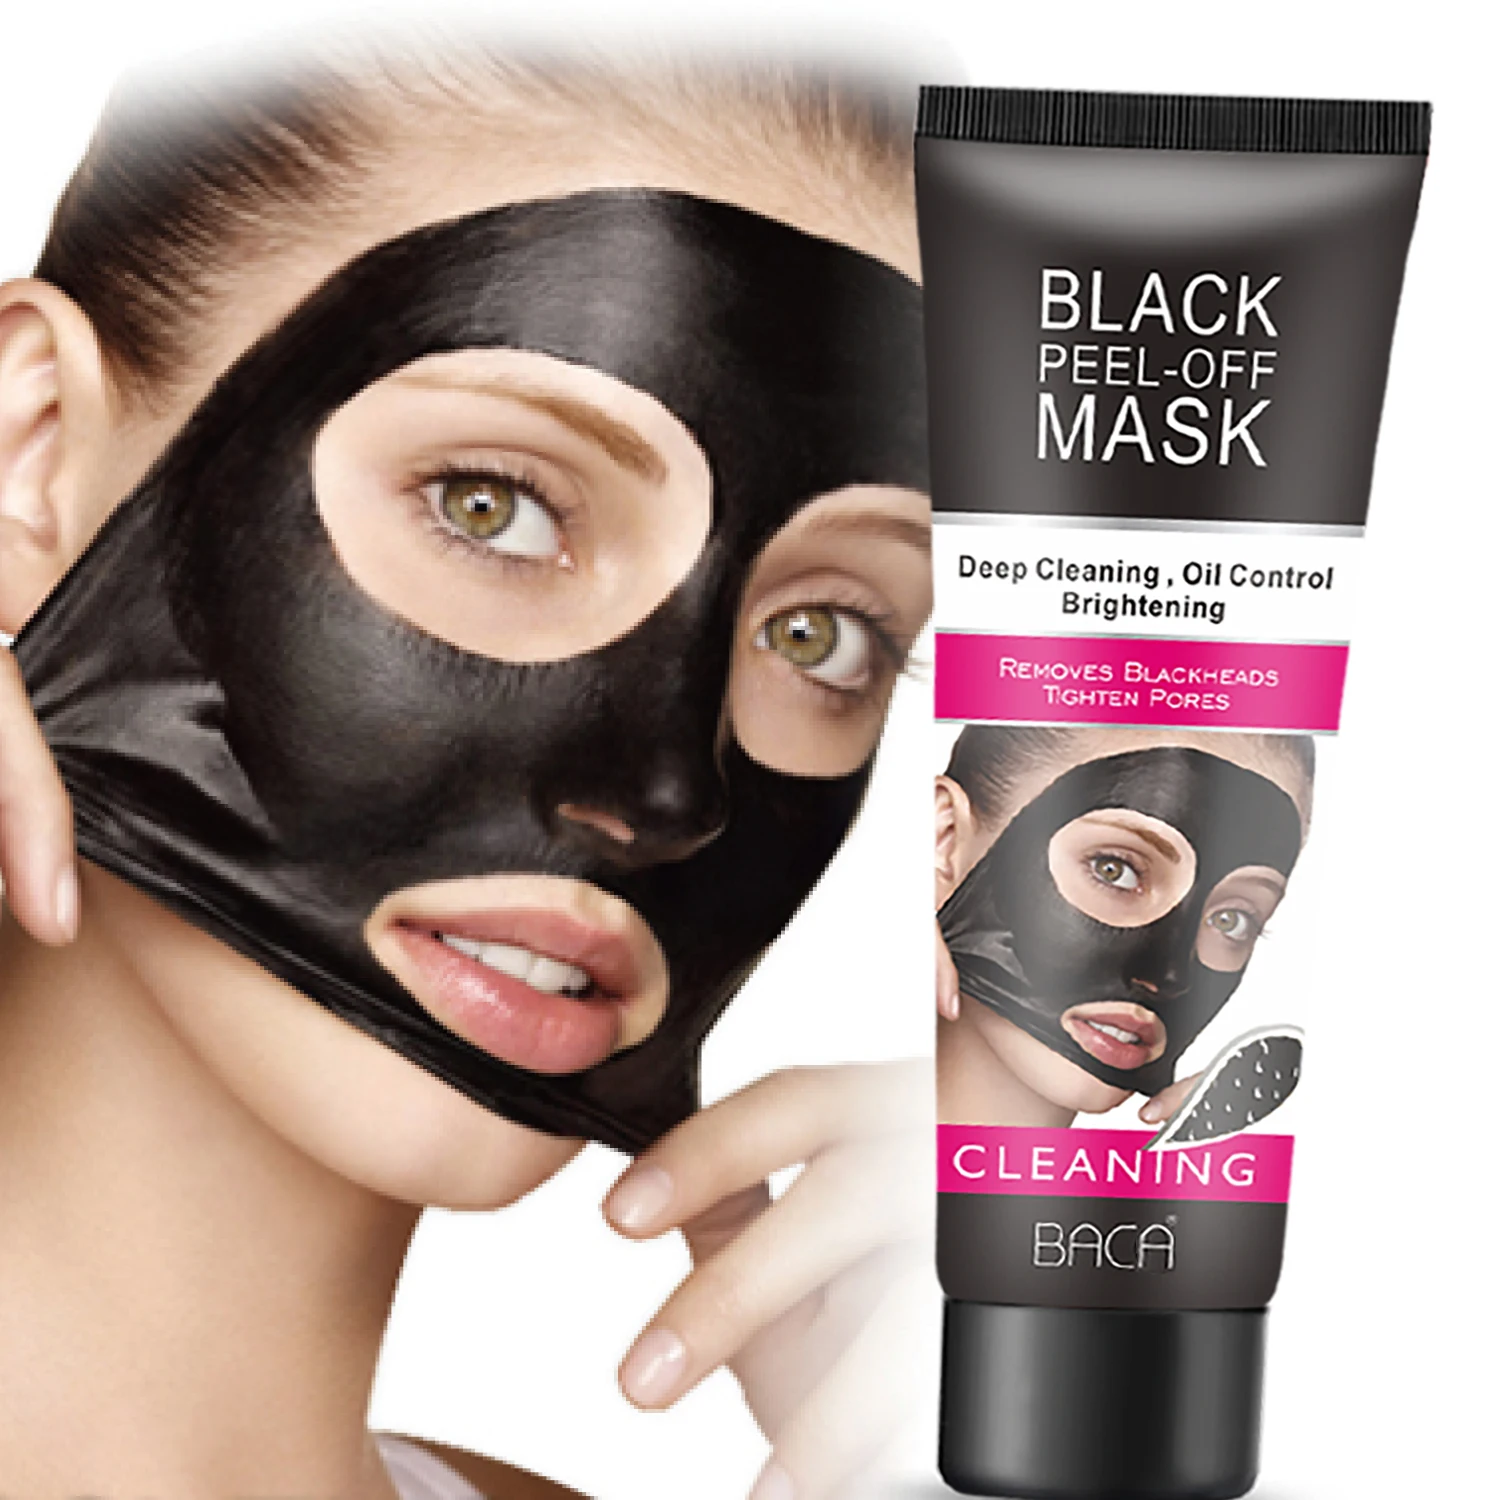 Source Blackhead Removal Facial Mask Black Peel Off Mask Oil Control Shrinking Pores Black Mud Mask on m.alibaba